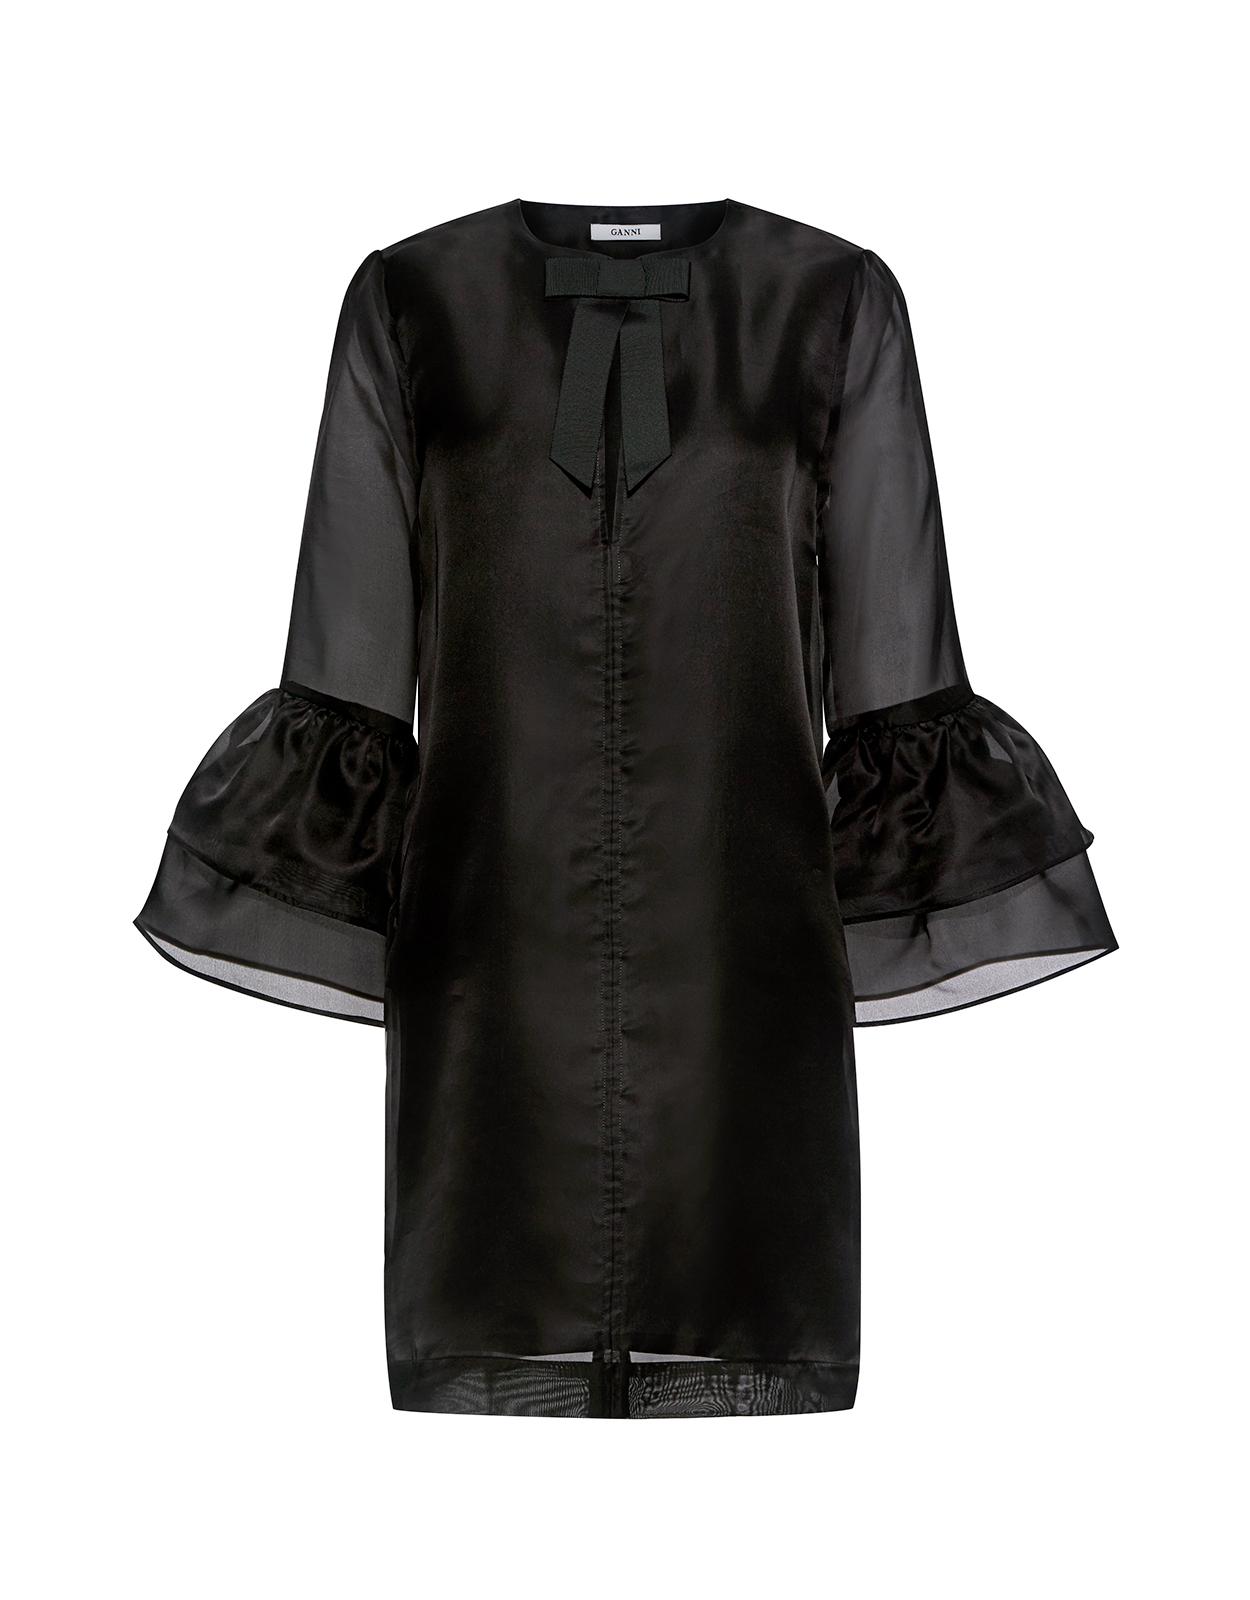 Ganni Silk Seneca Bell Sleeve Dress in Black - Lyst